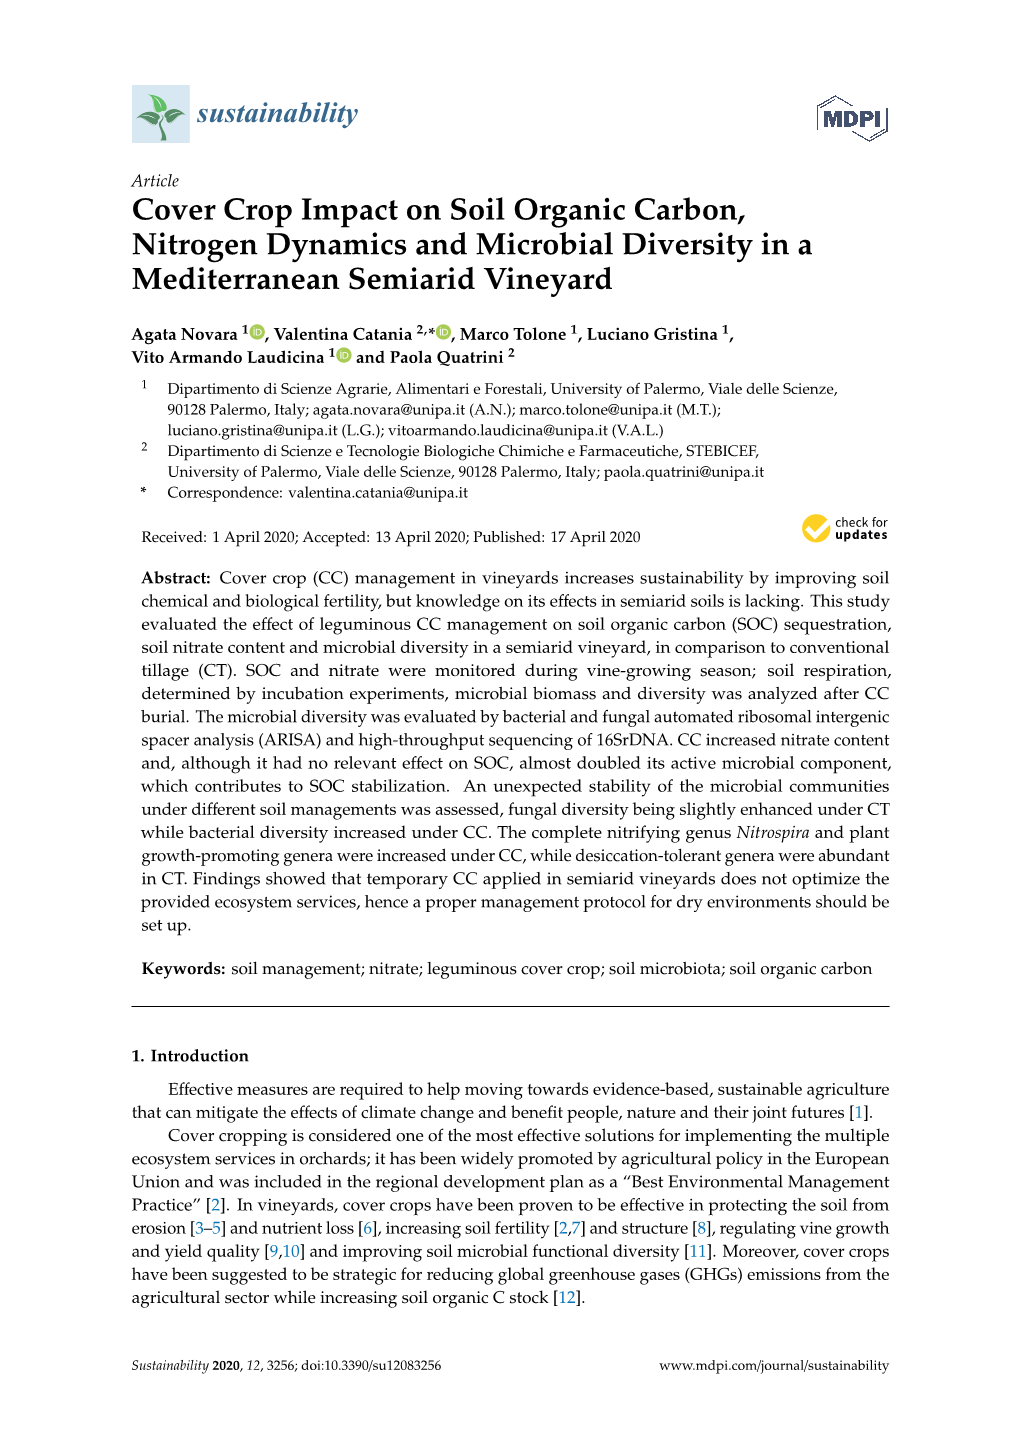 Cover Crop Impact on Soil Organic Carbon, Nitrogen Dynamics and Microbial Diversity in a Mediterranean Semiarid Vineyard